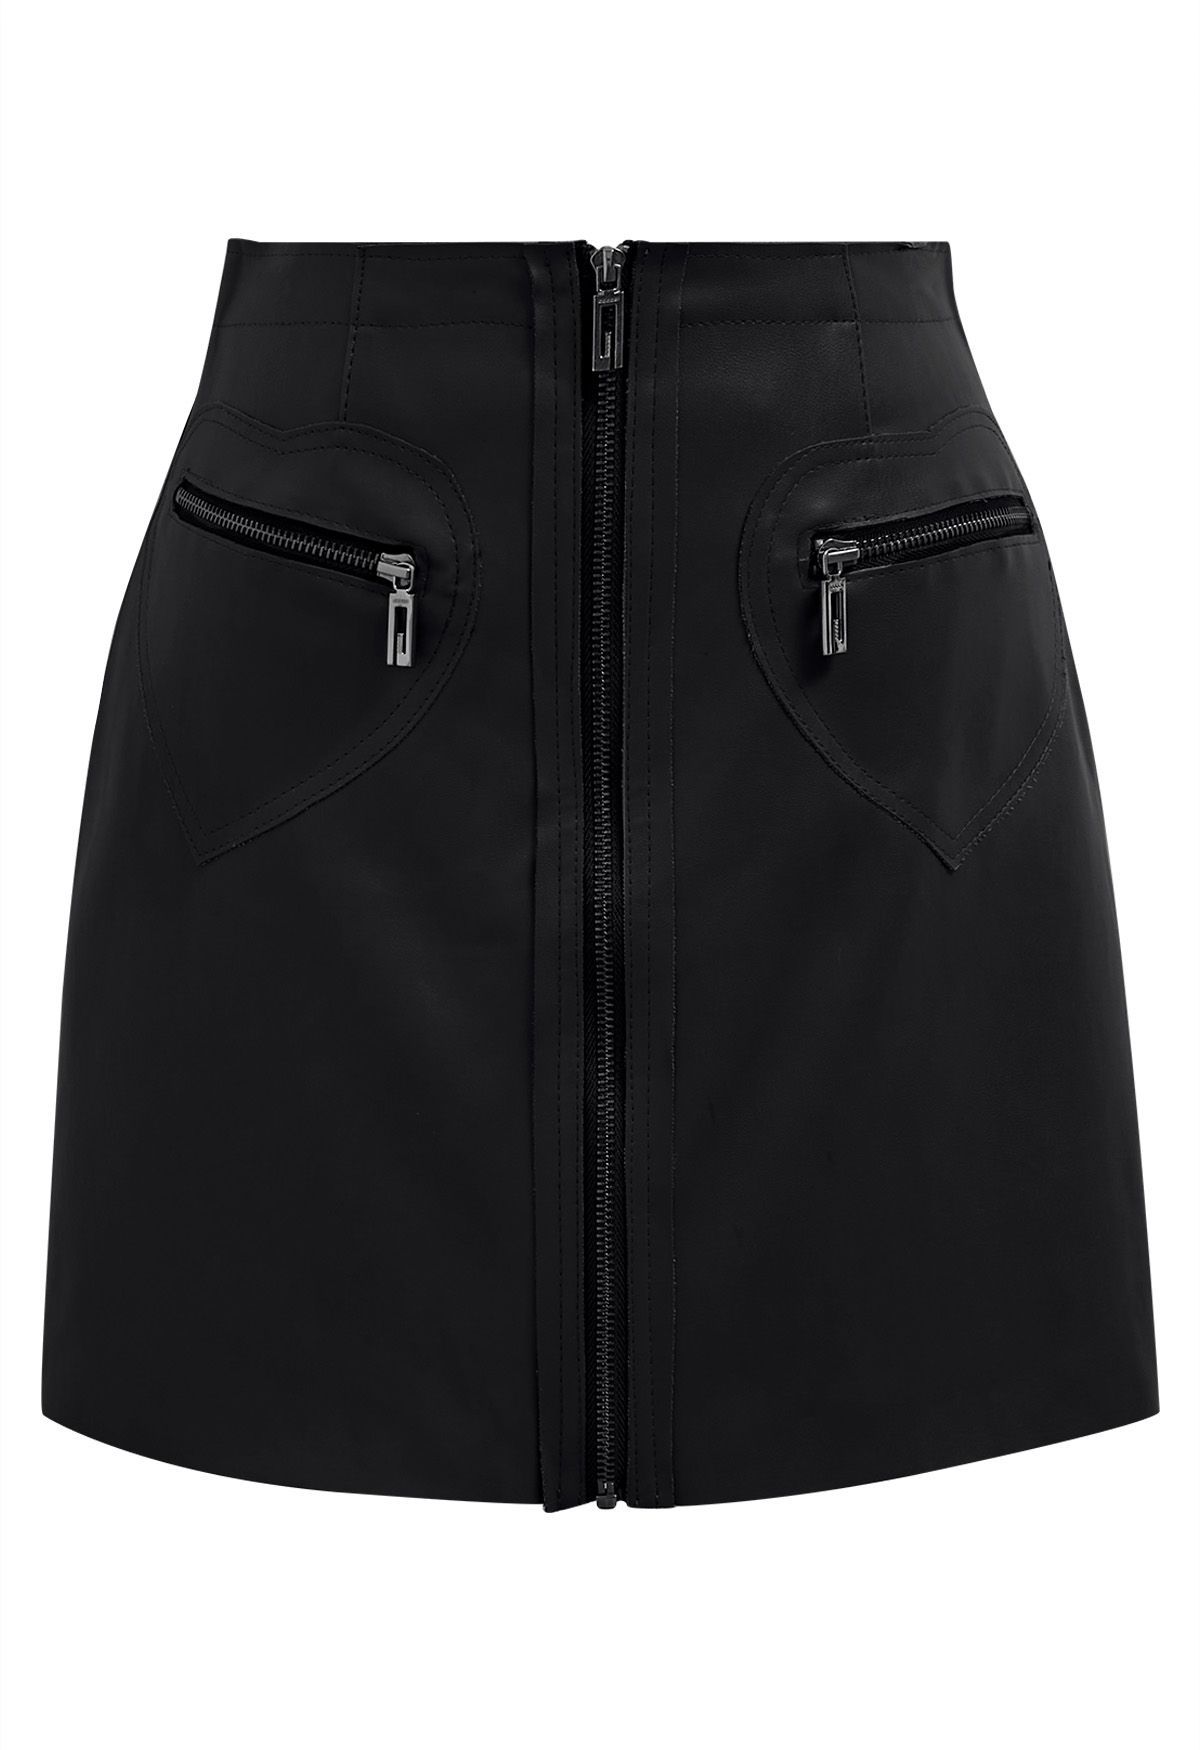 Zipper Faux Leather Mini Skirt in Black | Chicwish